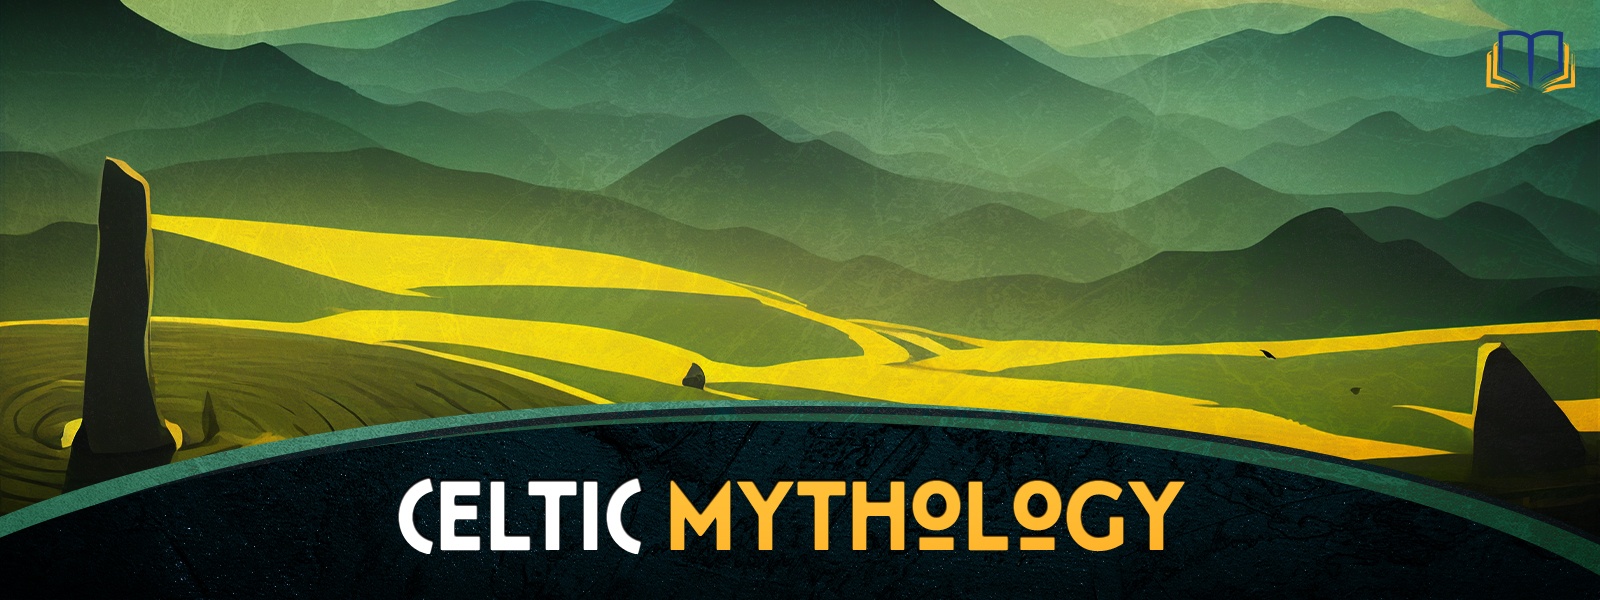 Celtic Mythology Hub Landscape